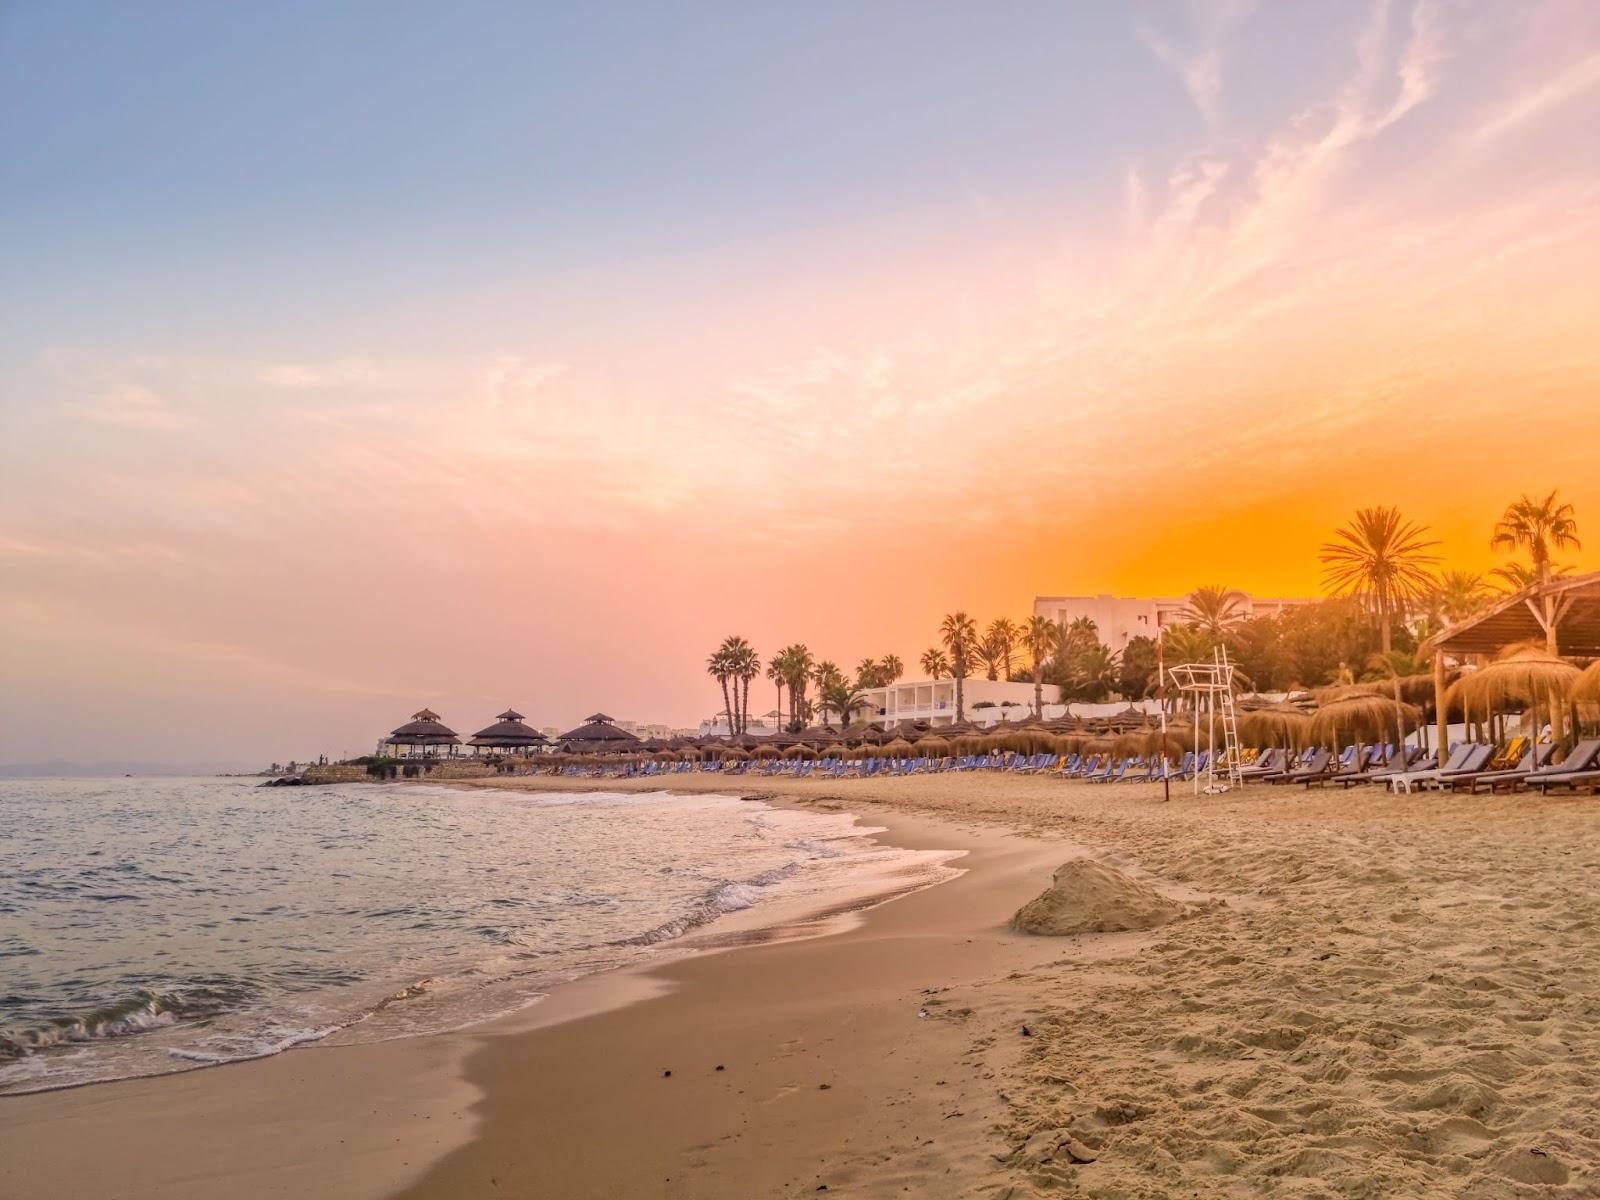 Sunset on a Tunisian beach.